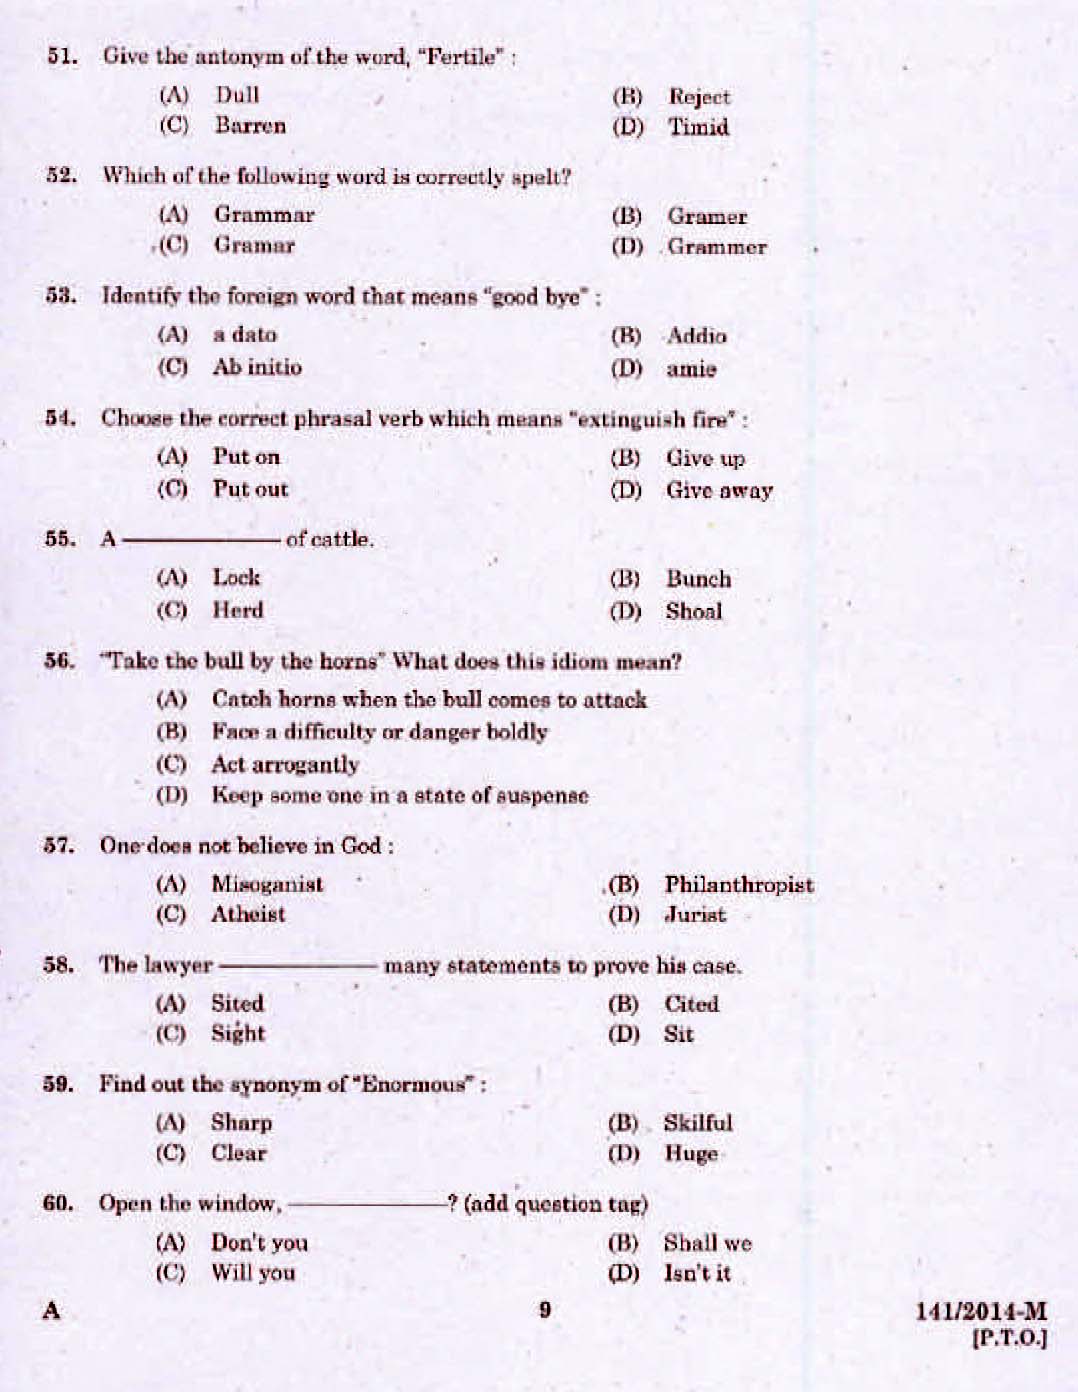 Kerala PSC Assistant Compiler Exam 2014 Question Paper Code 1412014 M 7